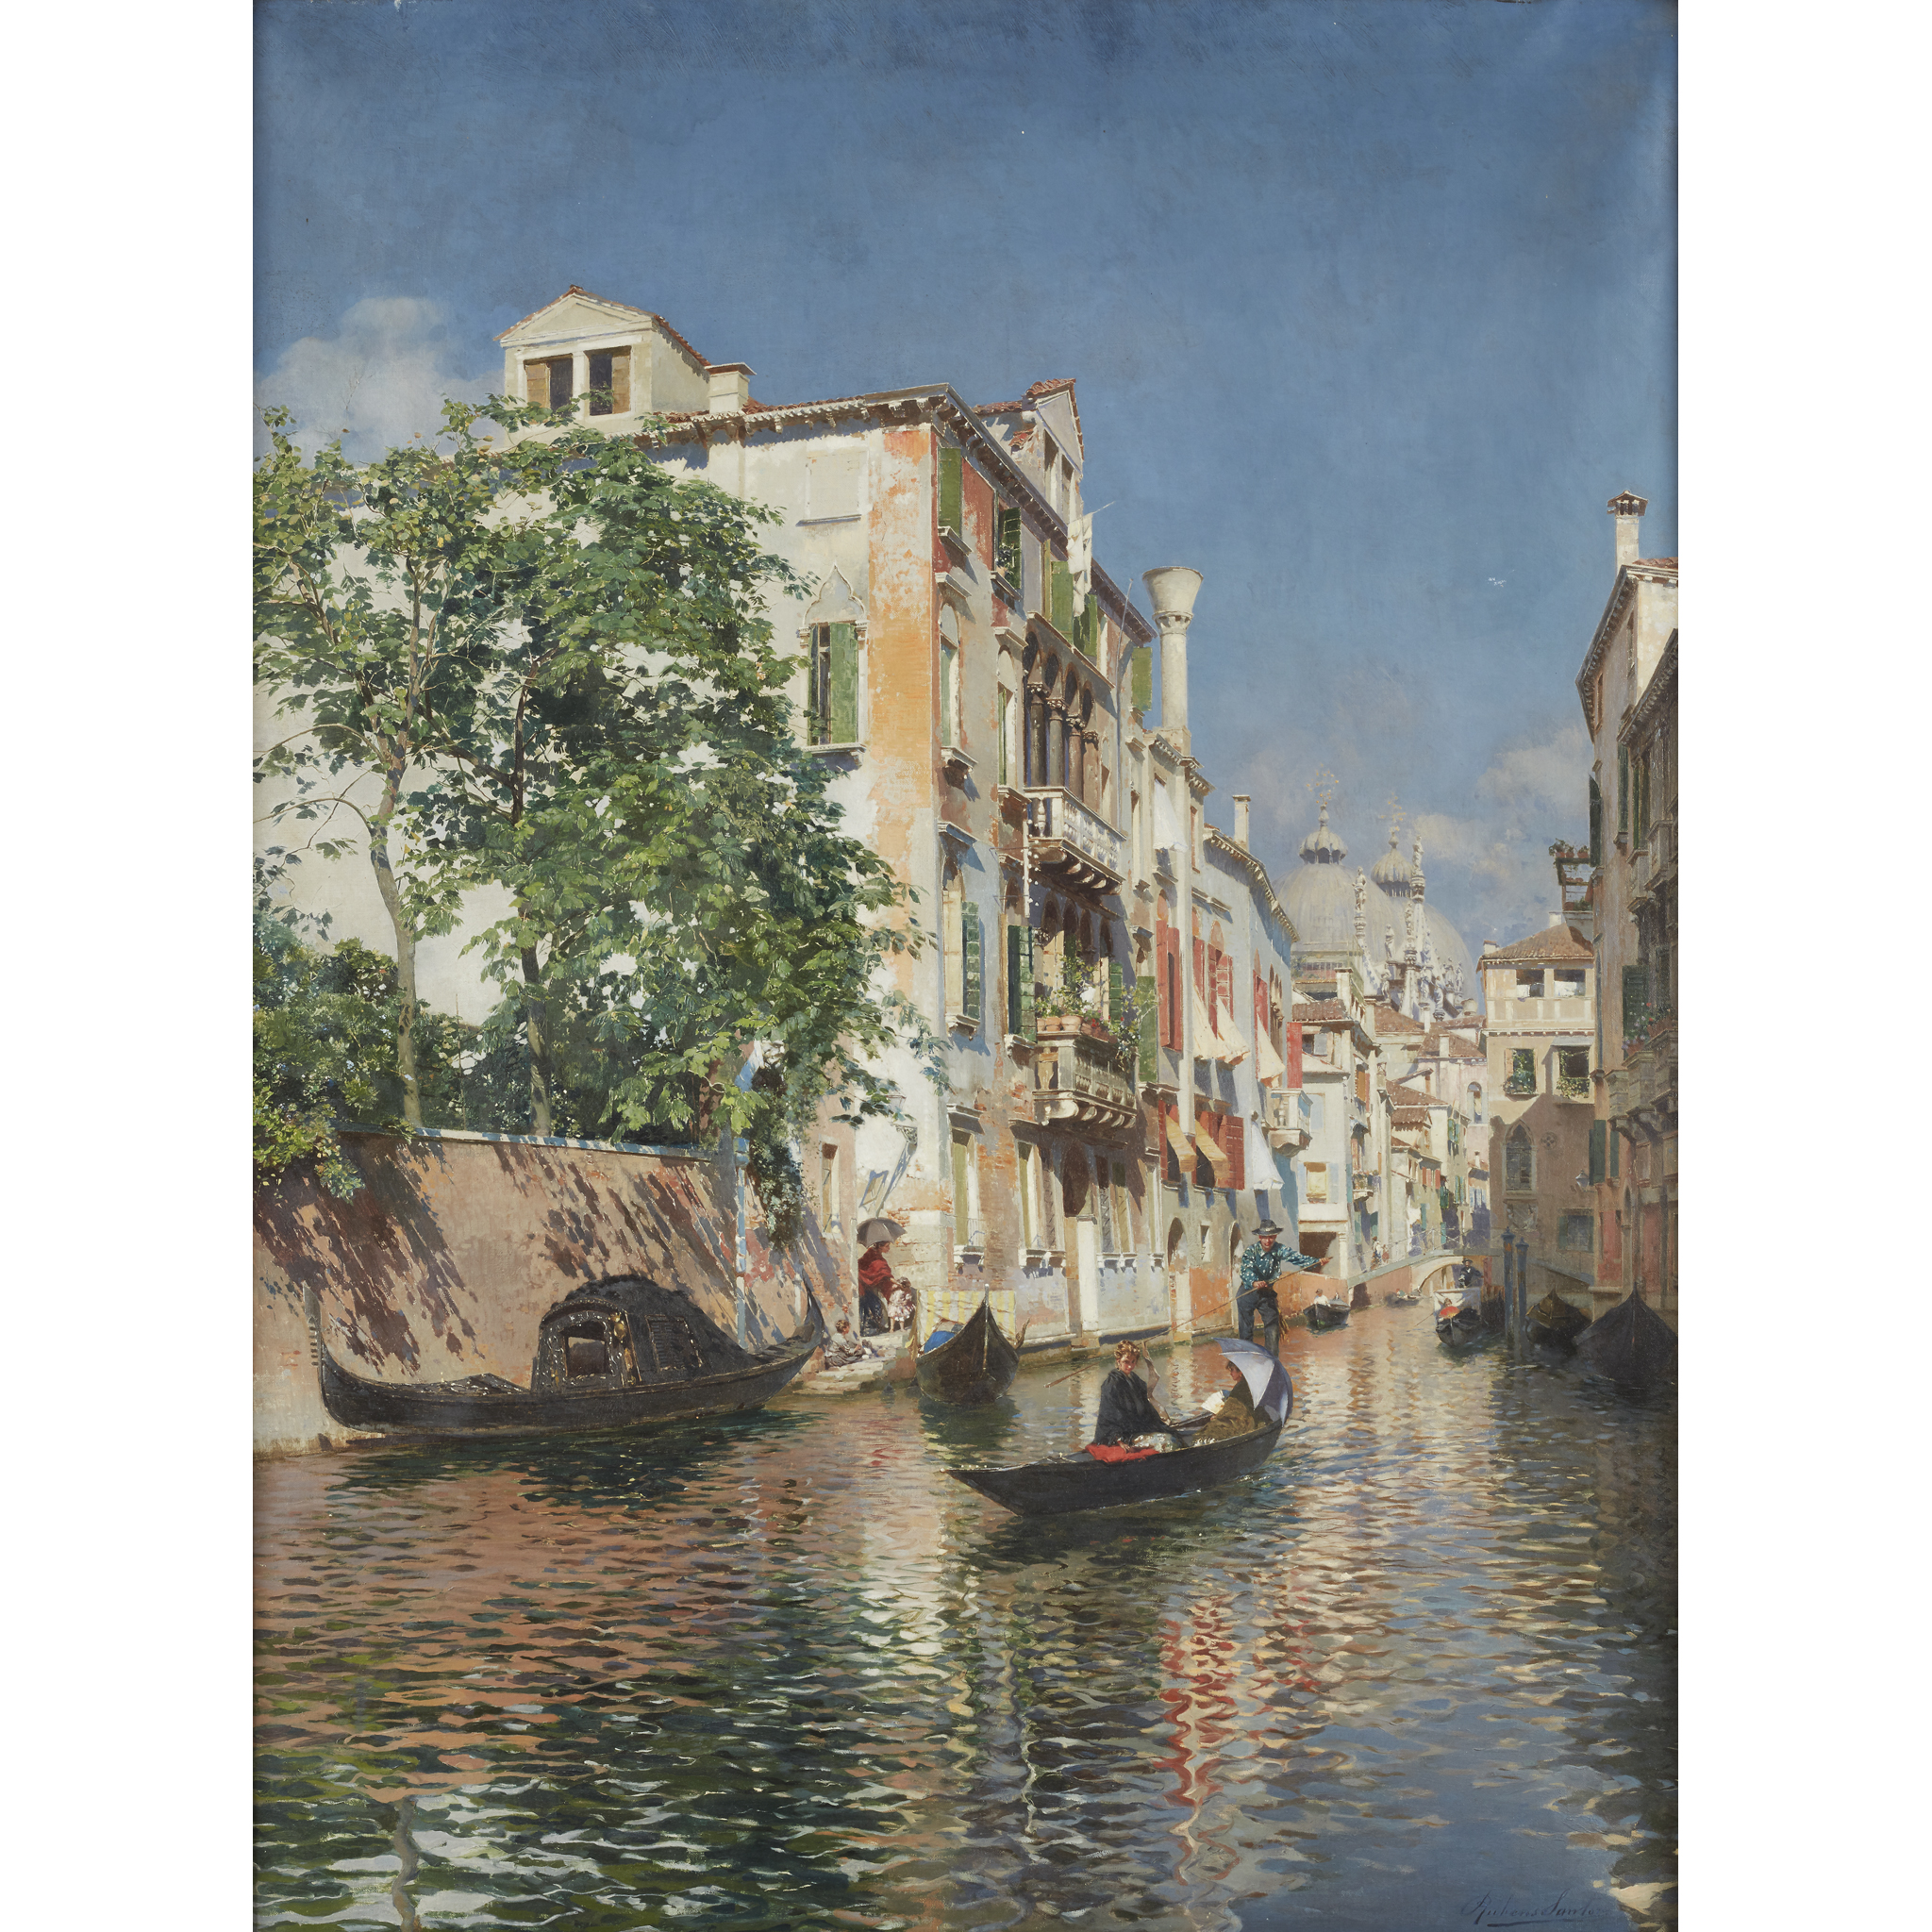 Rubens Santoro (Italian, 1859–1942) A Venetian Canal, with Saint Mark's Basilica in the Distance